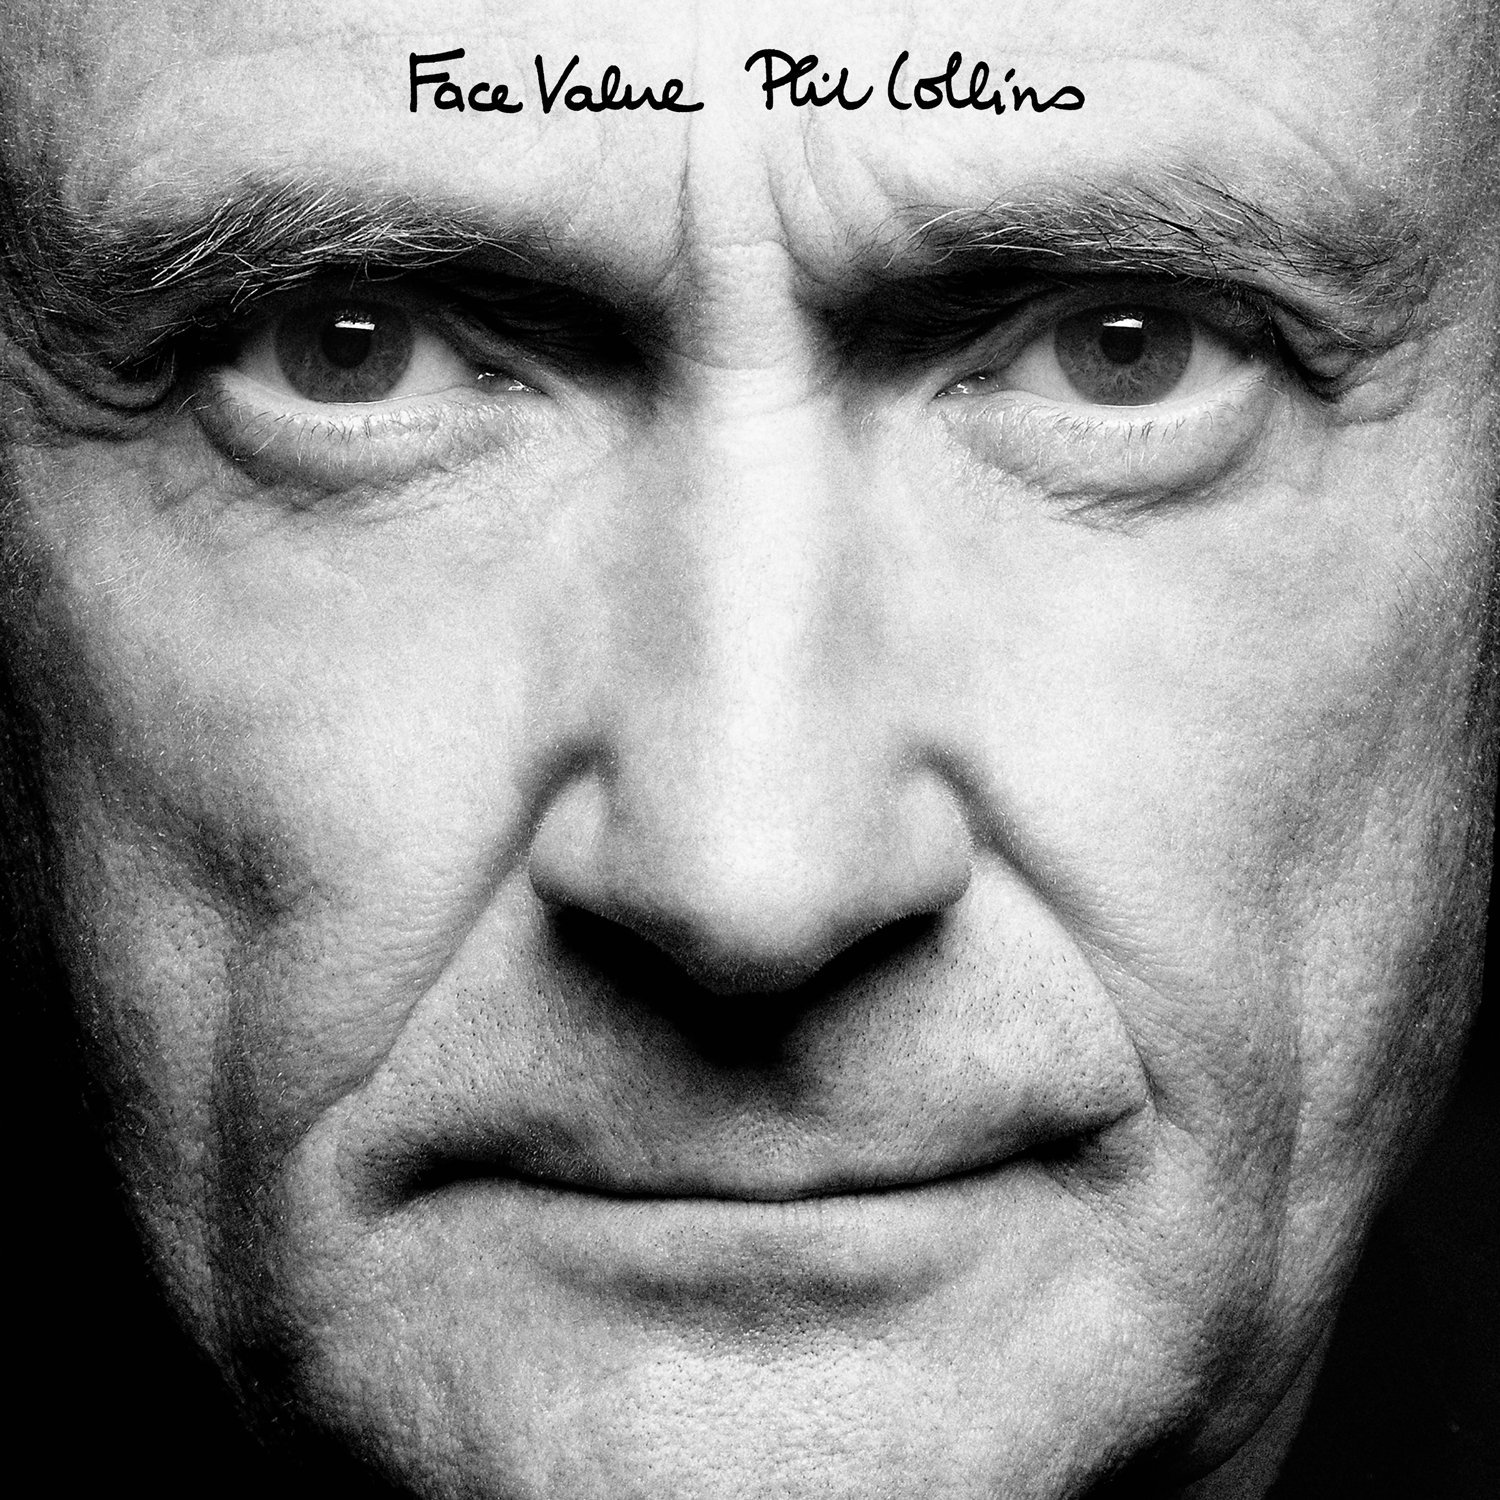 Phil Collins > Face Value